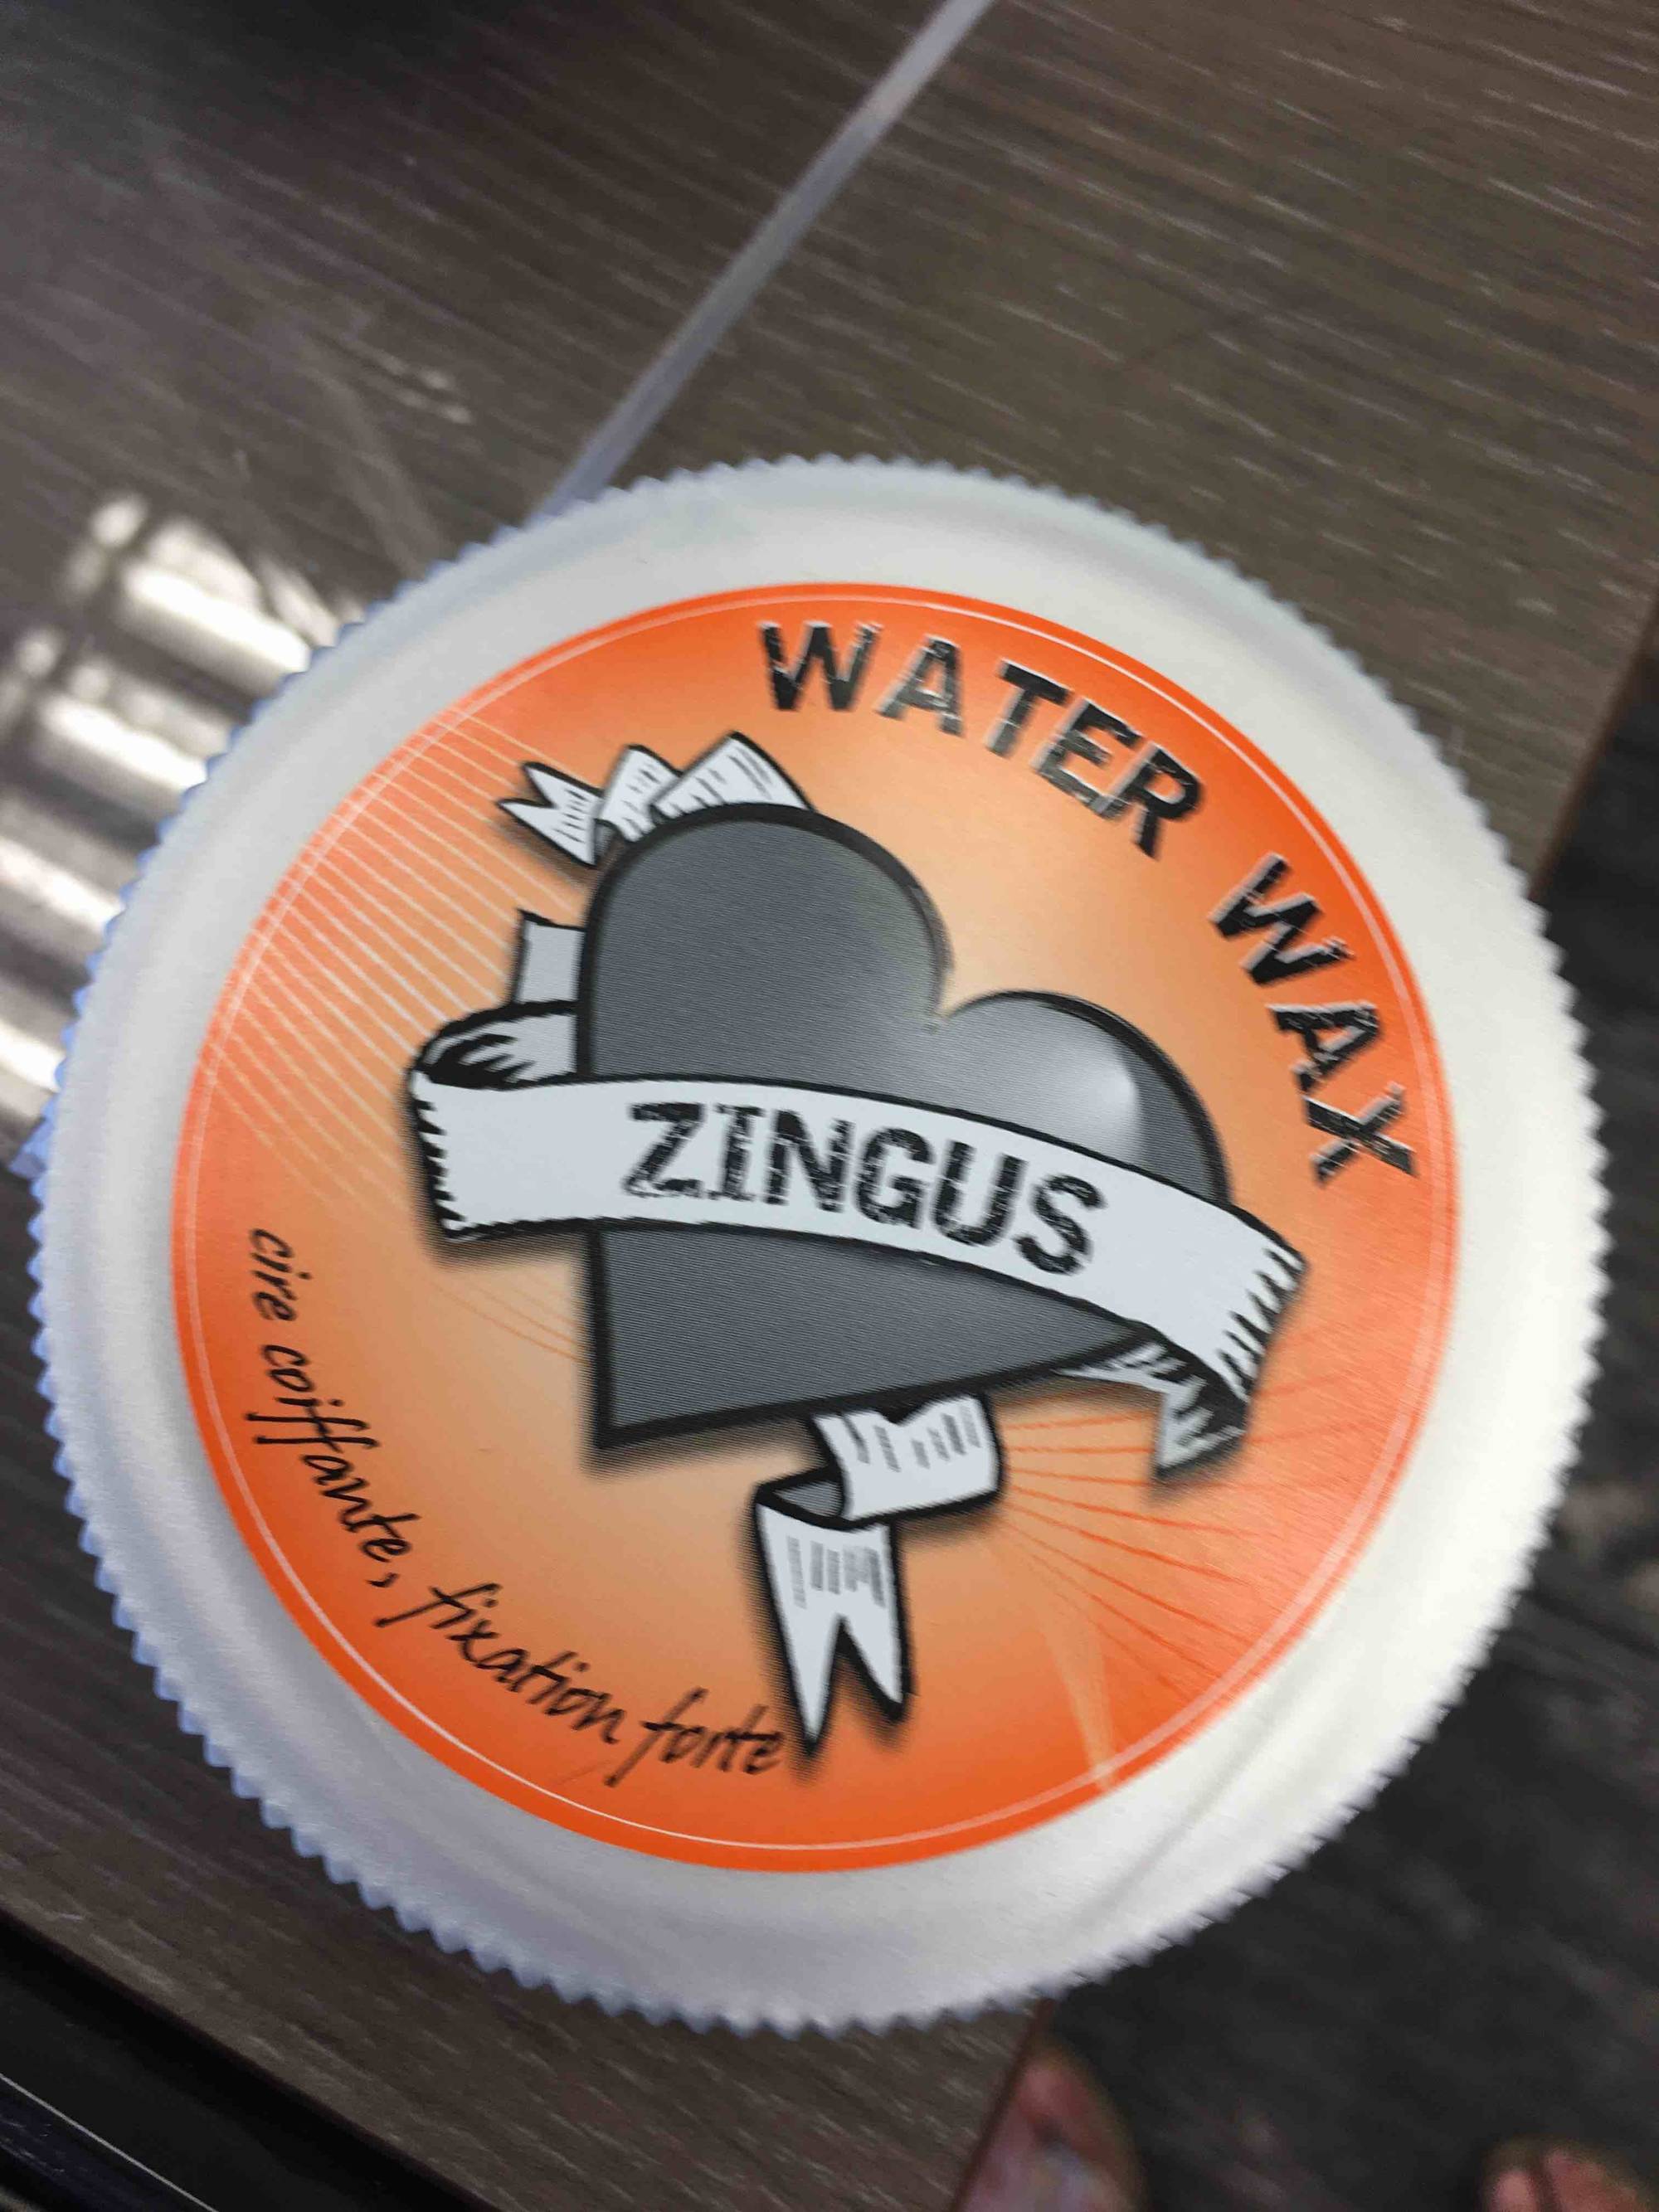 ZINGUS - Water wax - Cire coiffante, fixation forte